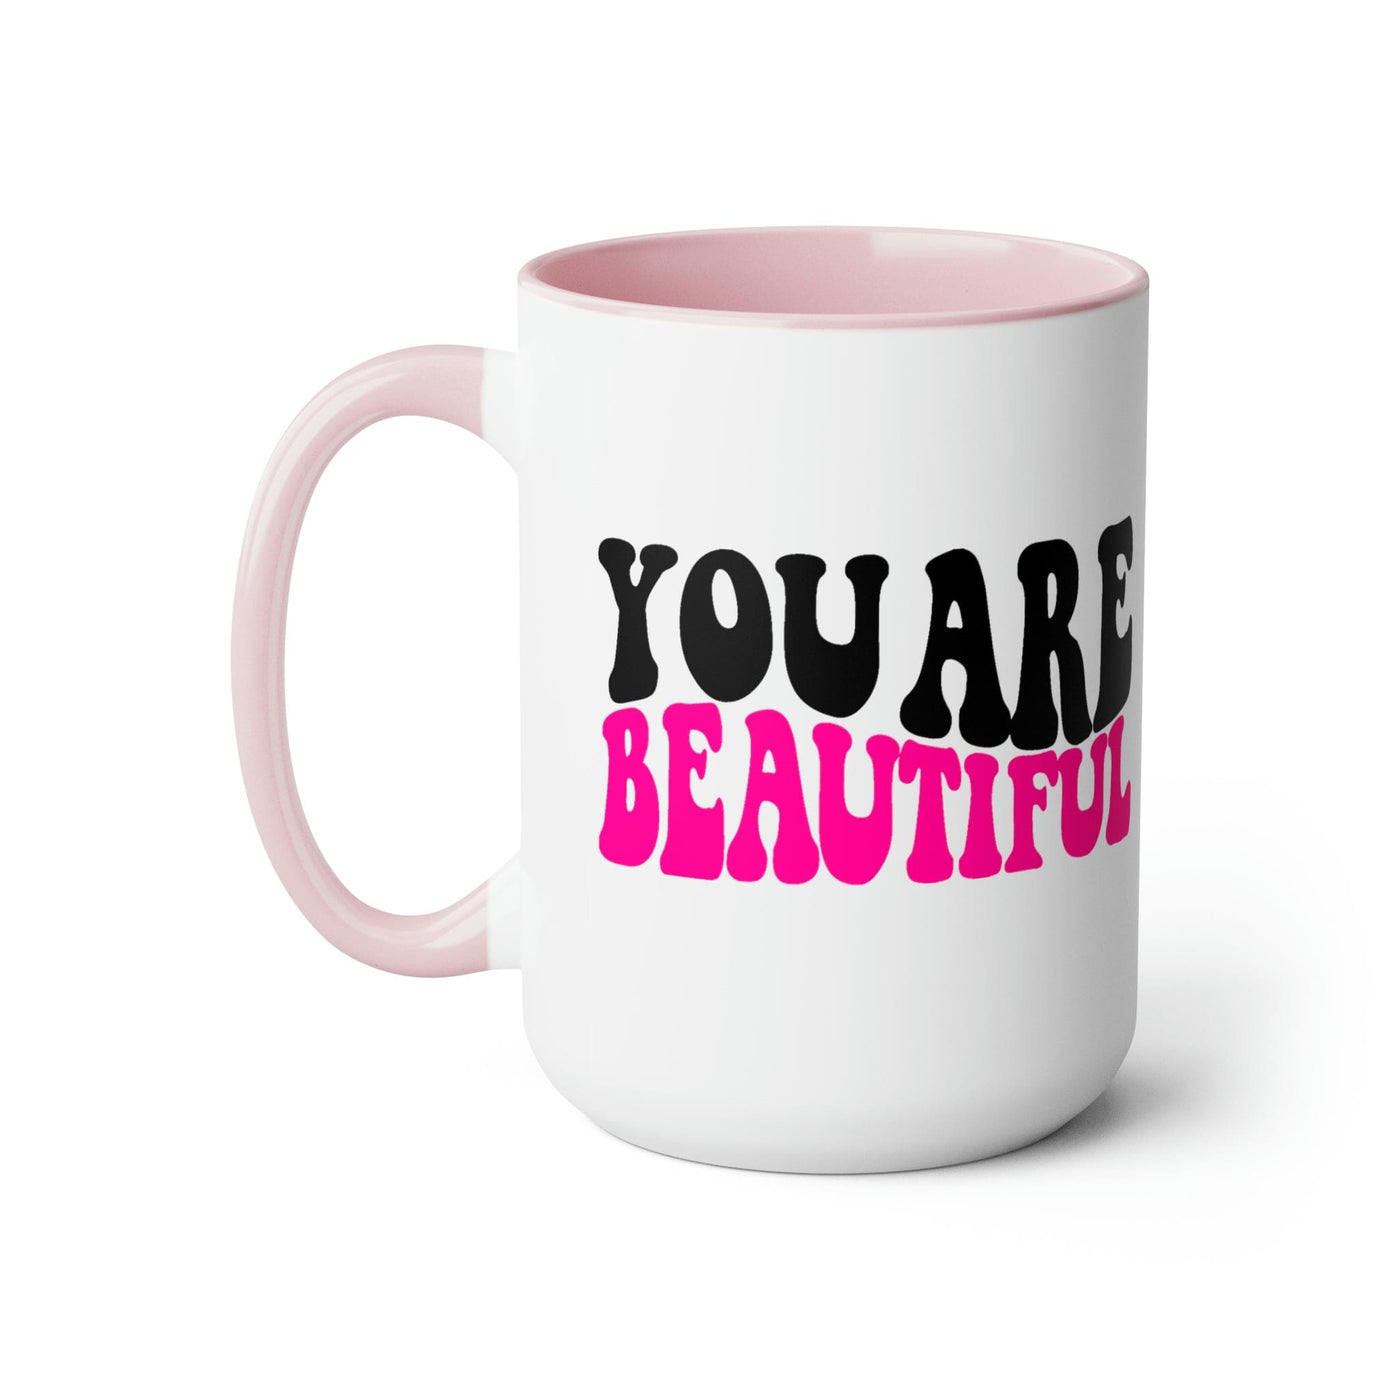 Two-tone Accent Ceramic Coffee Mug 15oz You Are Beautiful Retro Wavy Pink Black